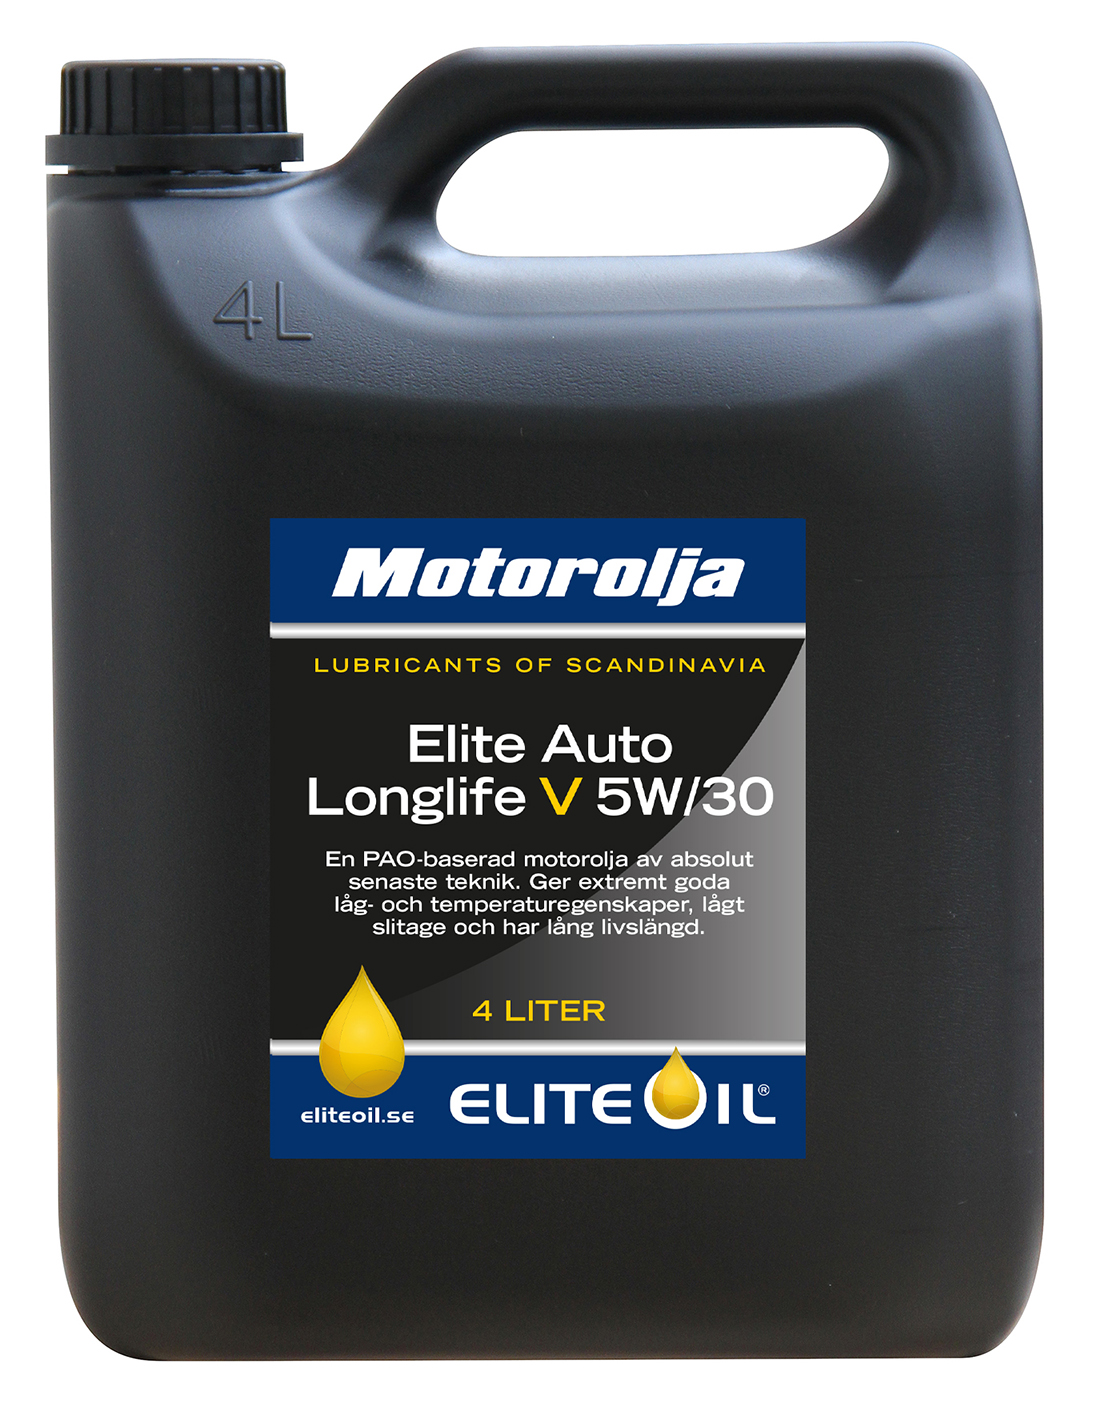 Elite Auto Longlife V, 5W/30, 4 liter dunk (3-pack) - 3 pack-image